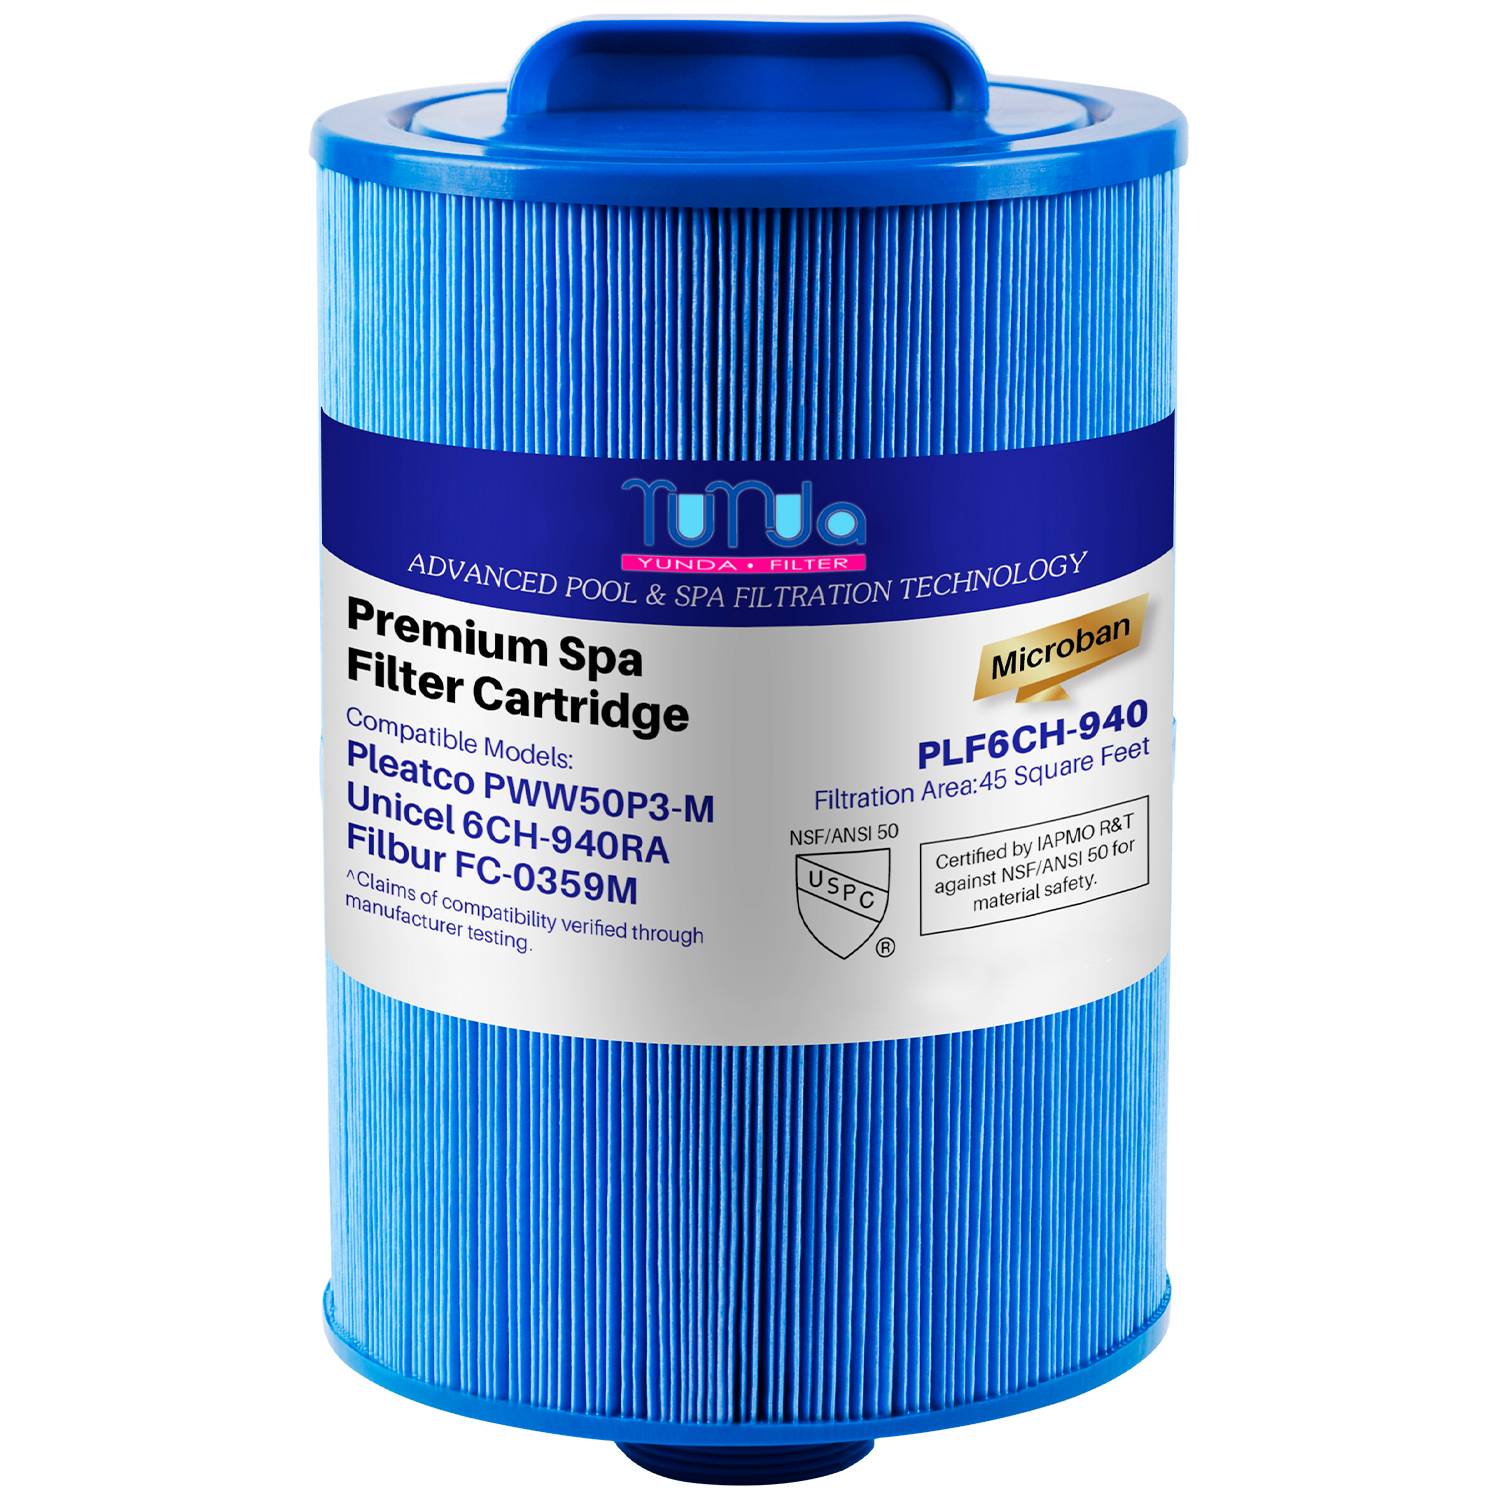 Spa Filter Fits for Pleatco PWW50P3-M, UNICEL 6CH-940RA, FILBUR FC-0359M